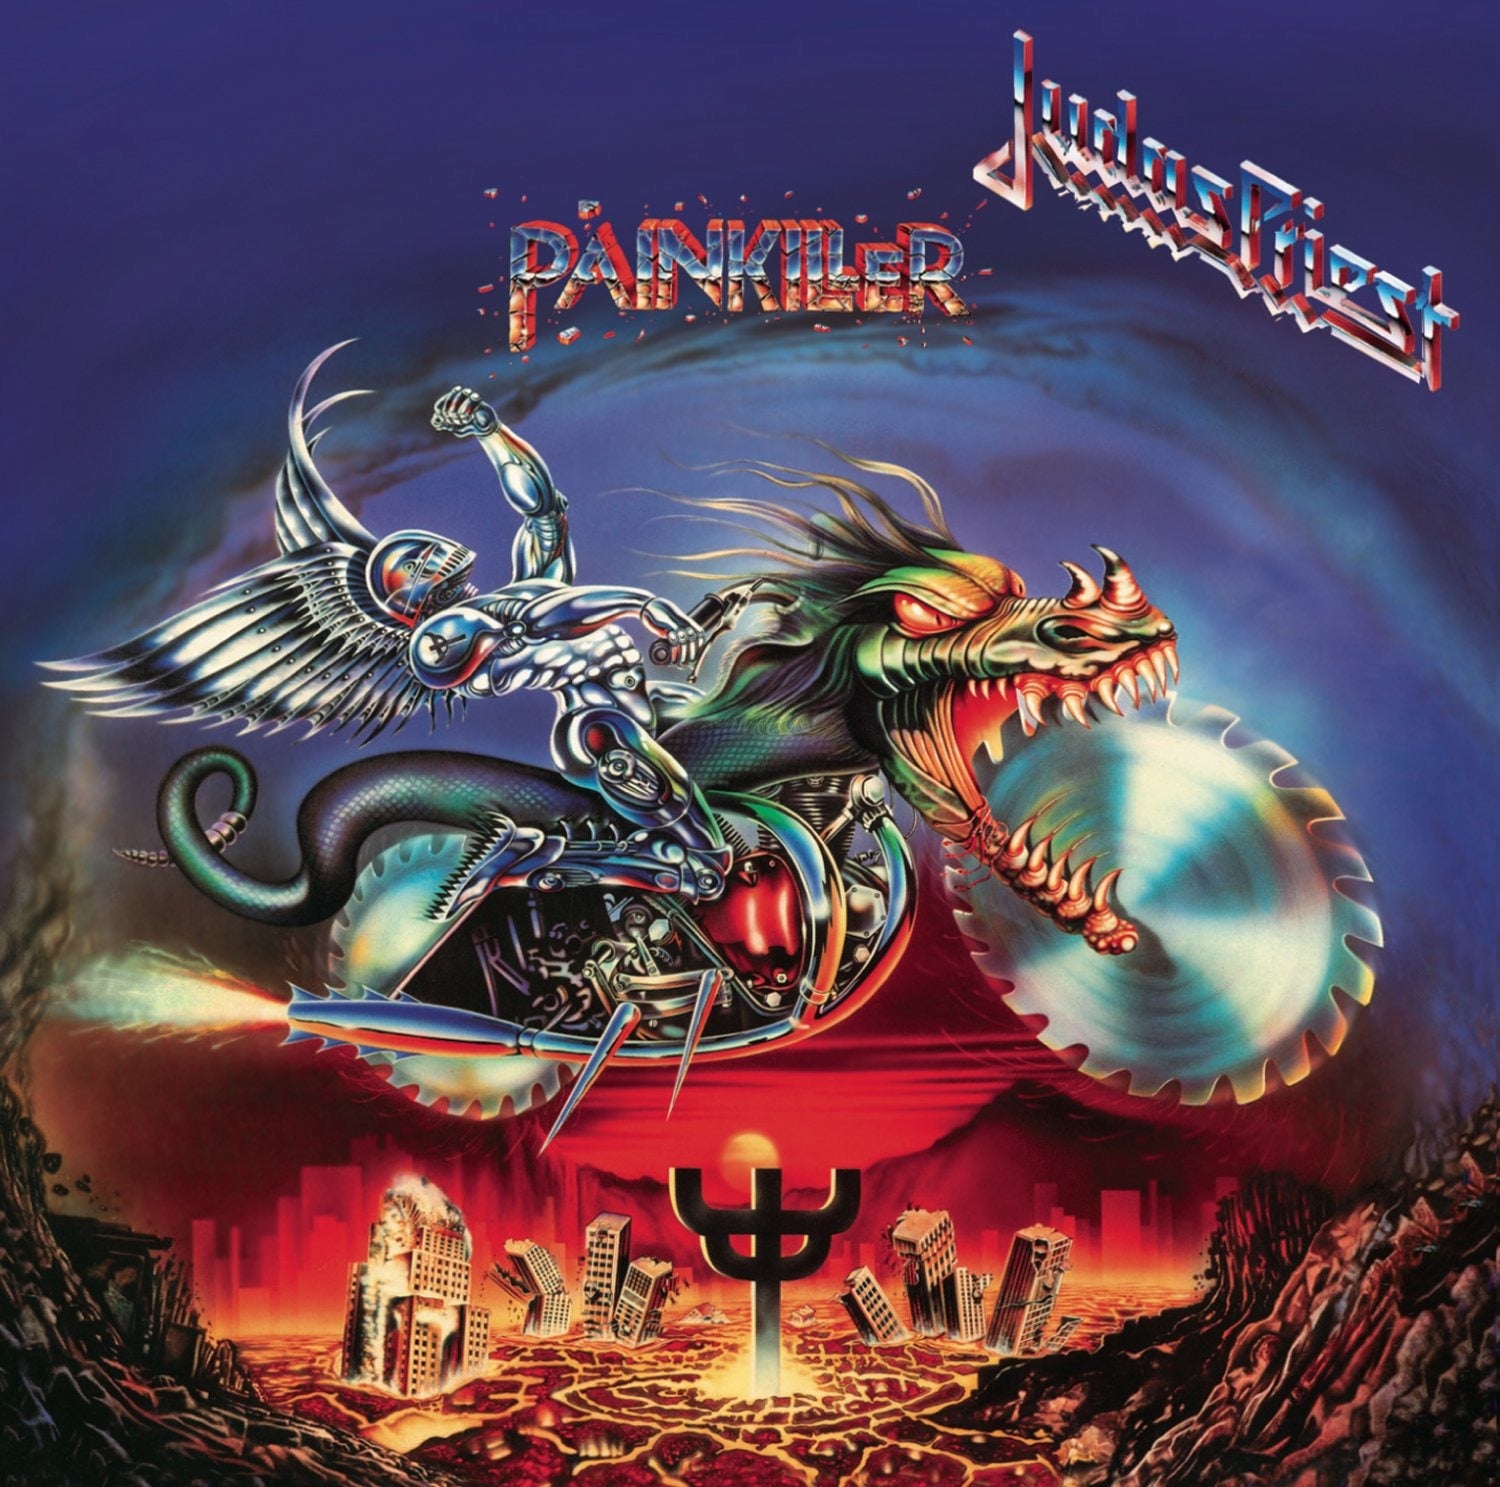 Judas Priest - Painkiller LP (UK Pressing, We Are Vinyl Pressing, 180g)